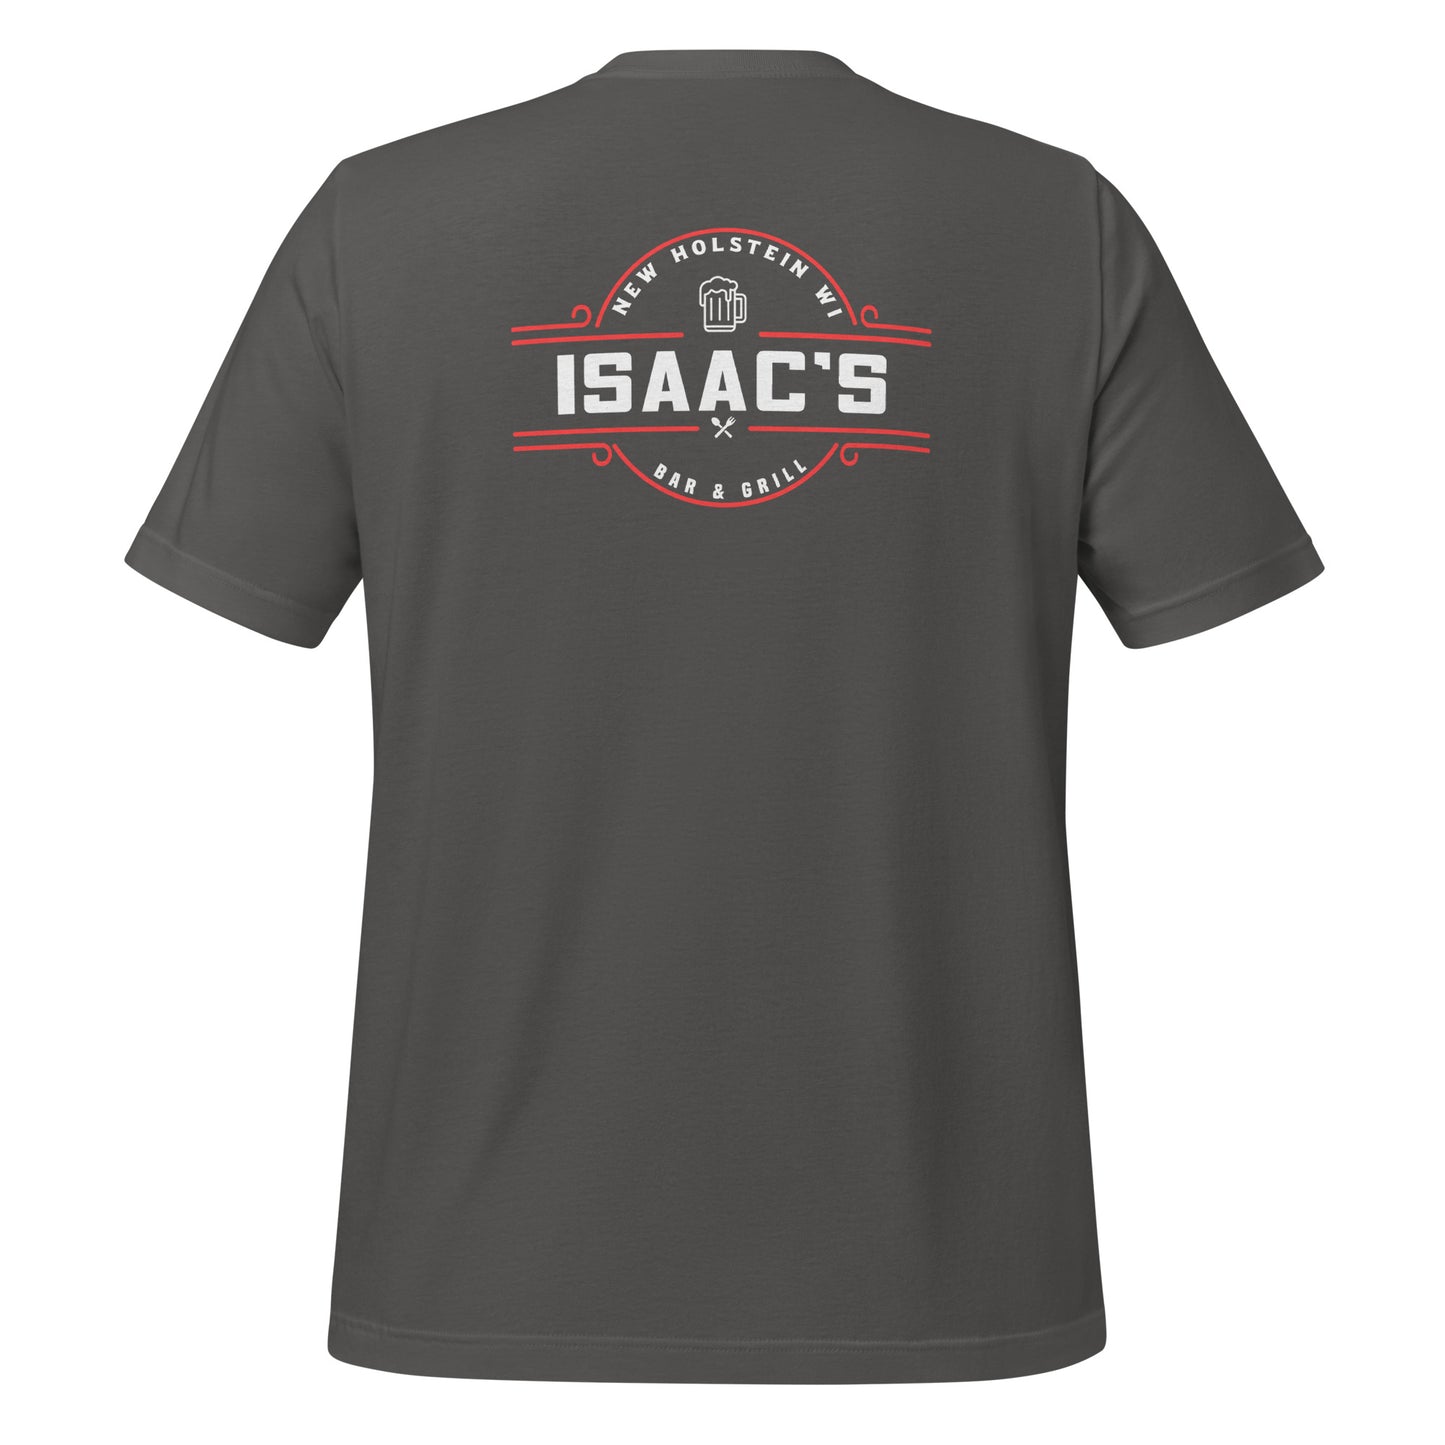 Retro Isaac's t-shirt